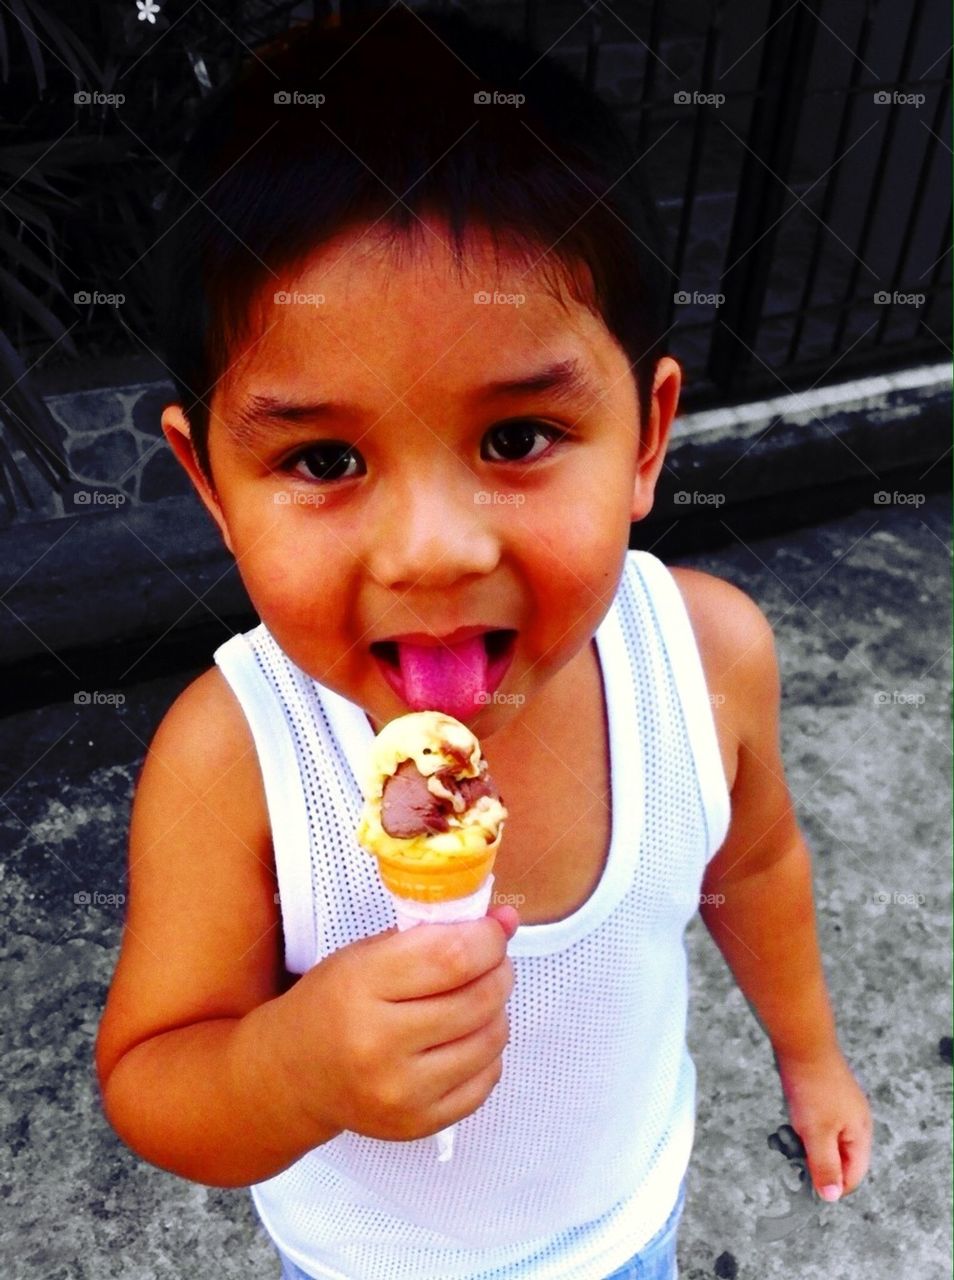 Child eating an ice cream